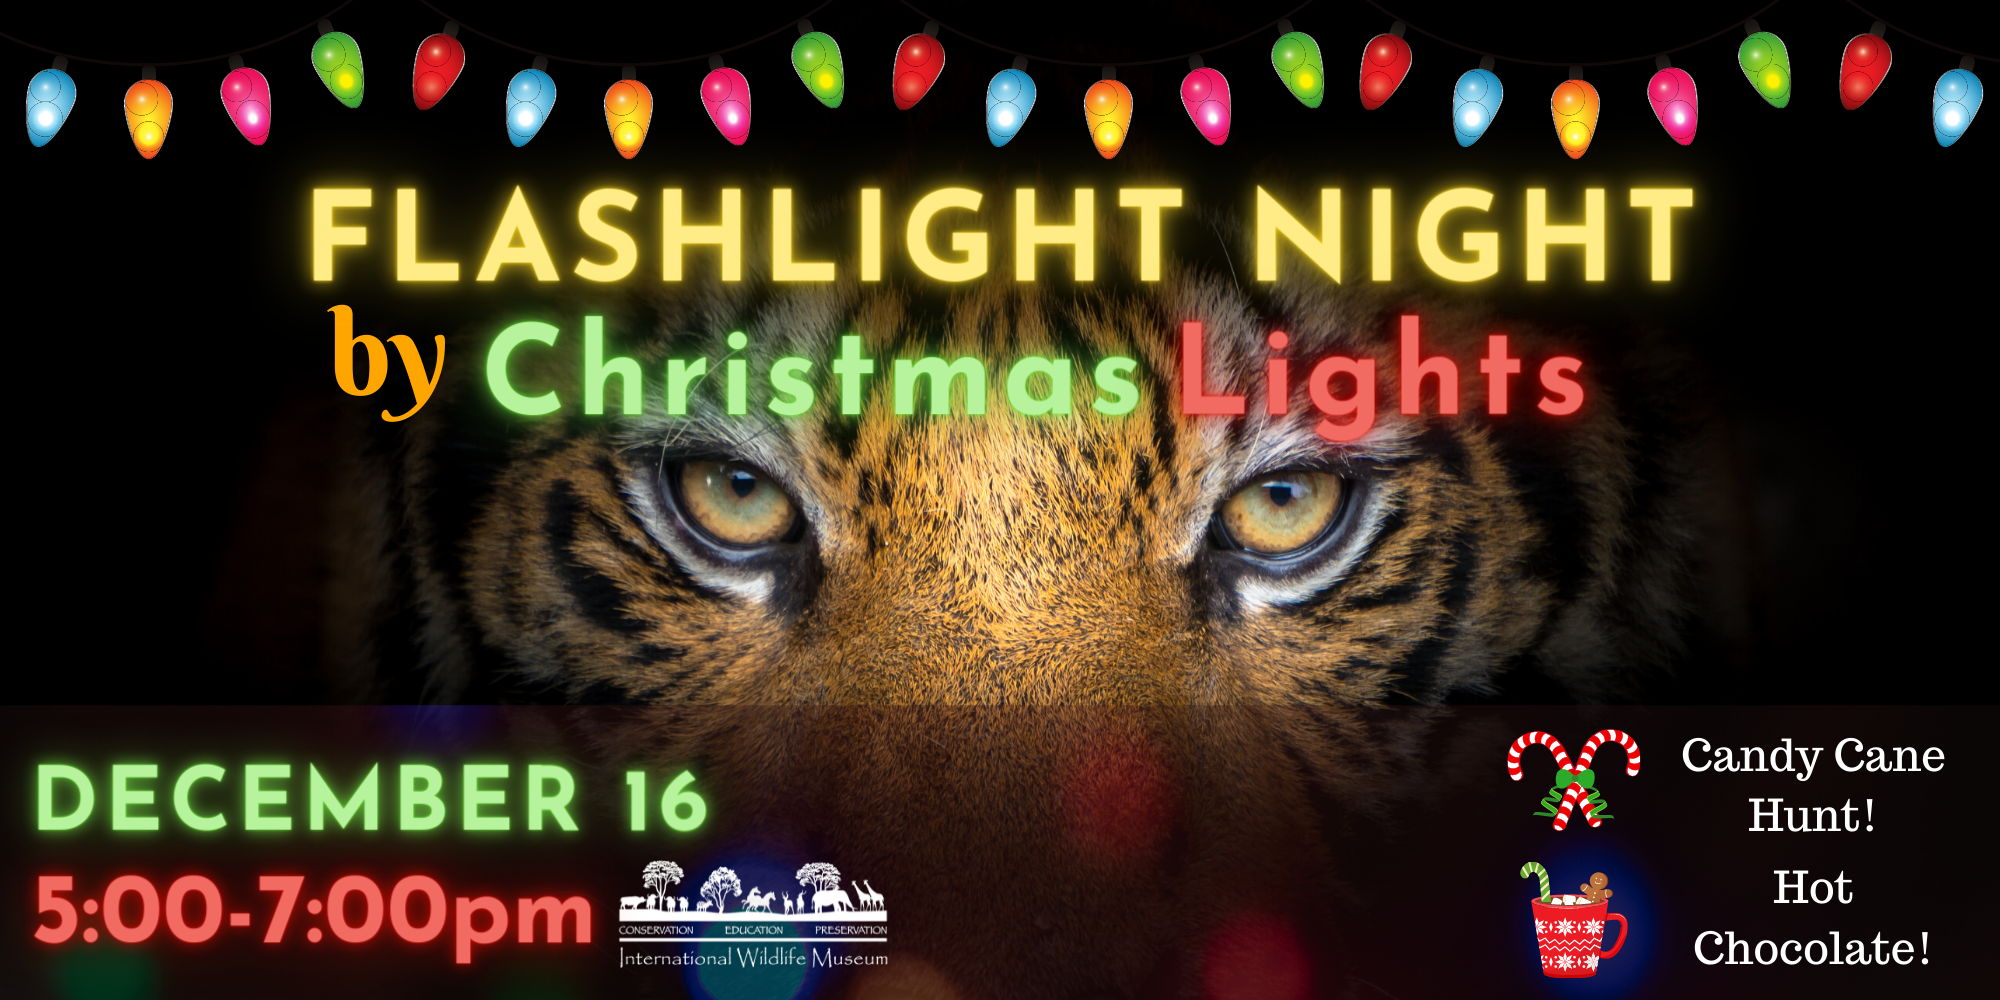 Flashlight Night by Christmas Lights promotional image